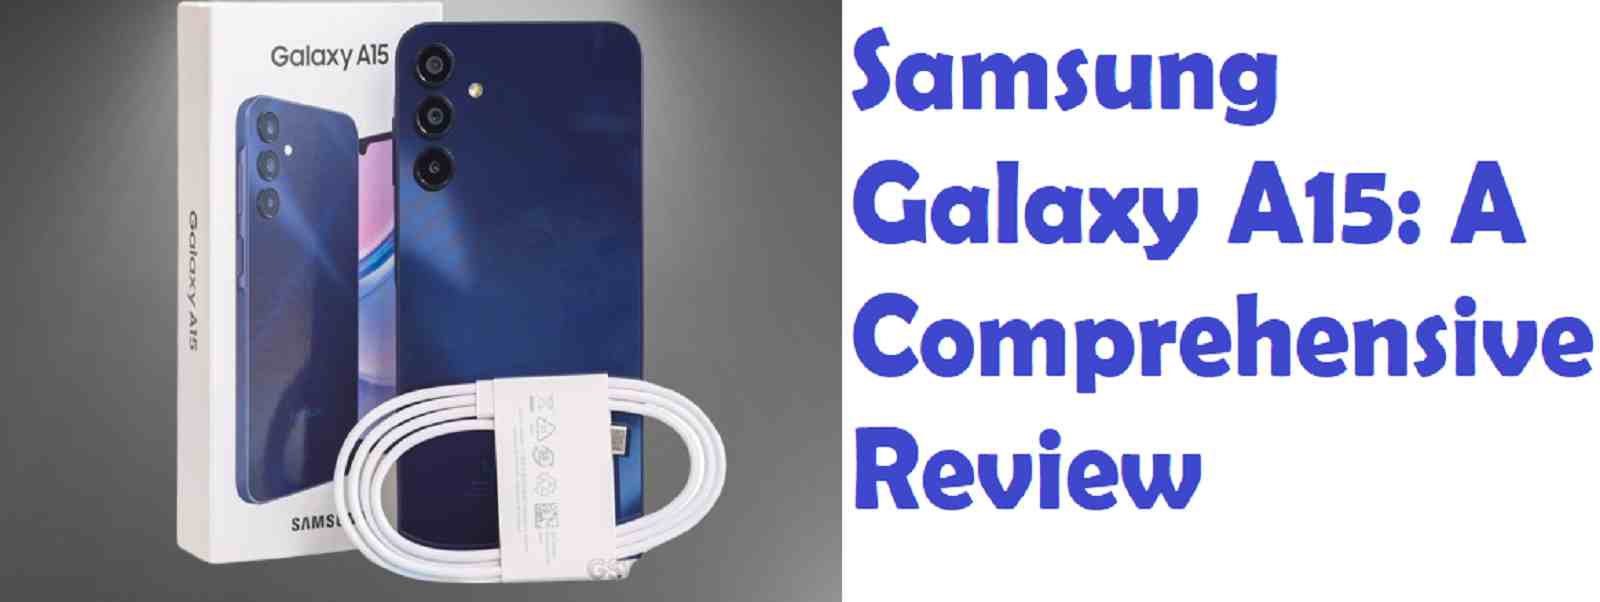 Samsung Galaxy A15: A Comprehensive Review